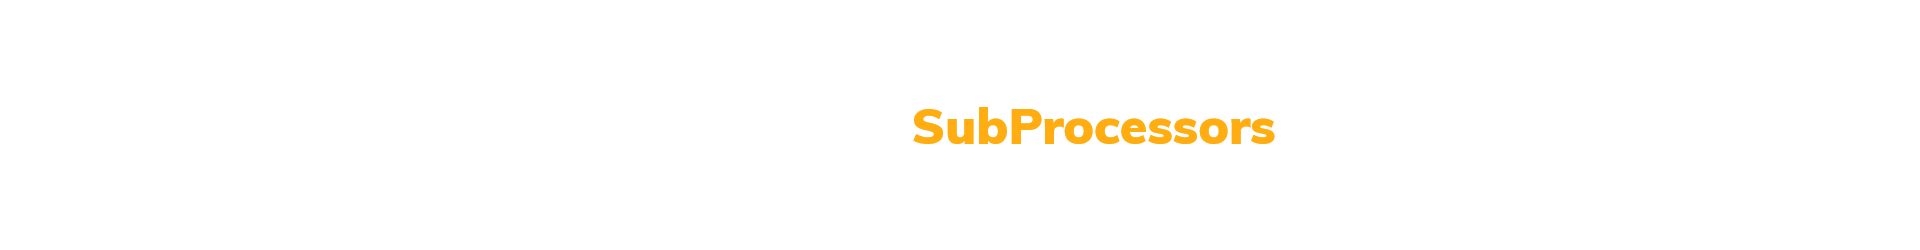 My-Digital-SubProcessors